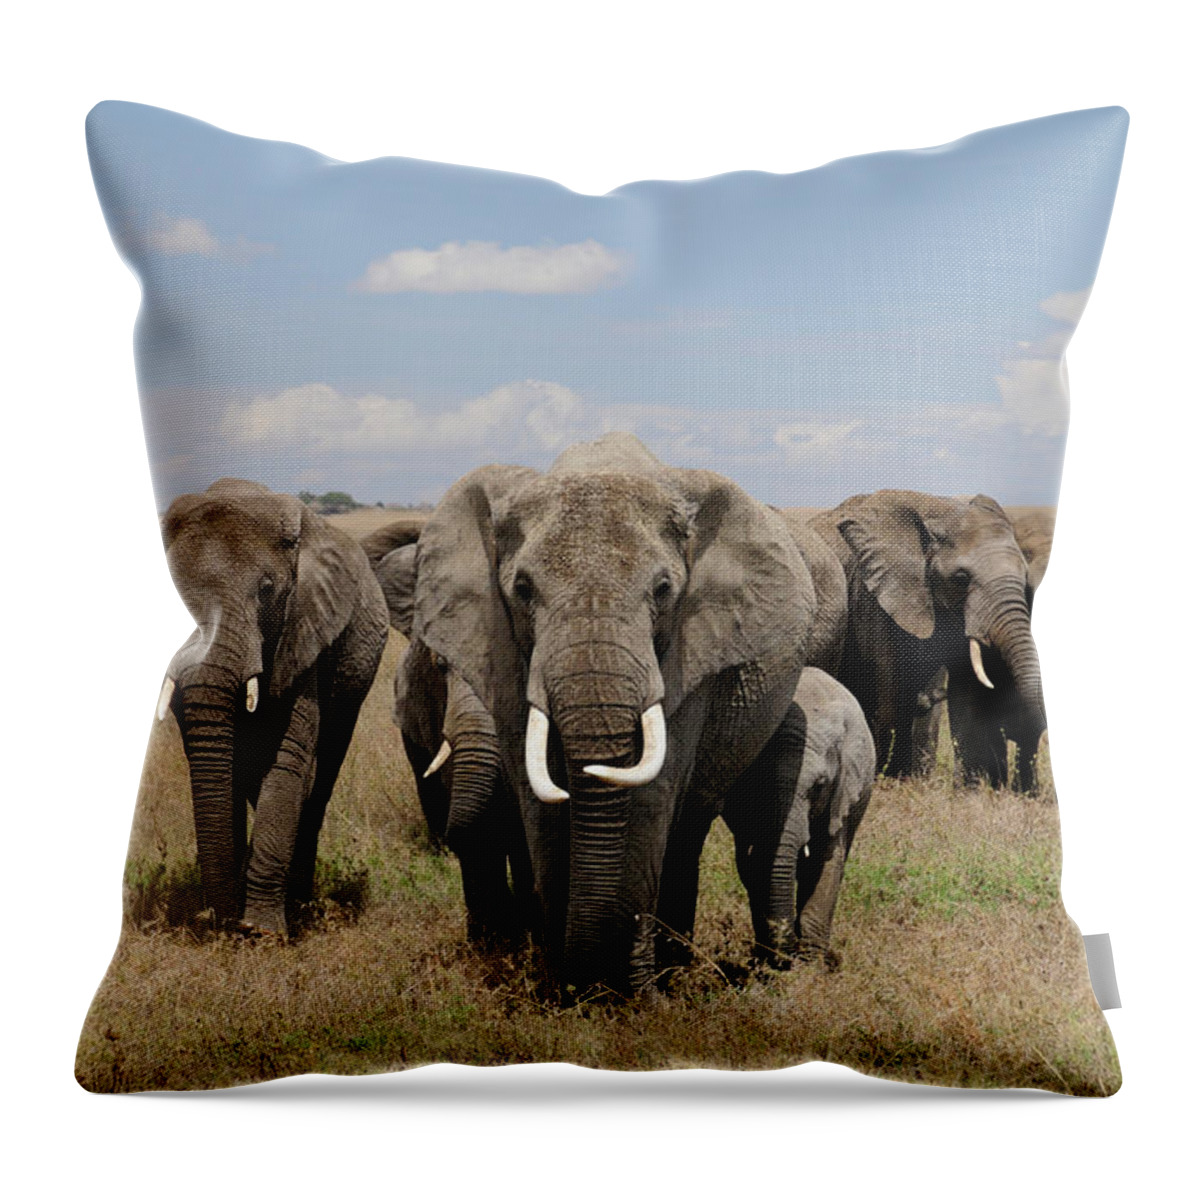 Grass Throw Pillow featuring the photograph Elephant Walk - Serengeti by Drew Prineas